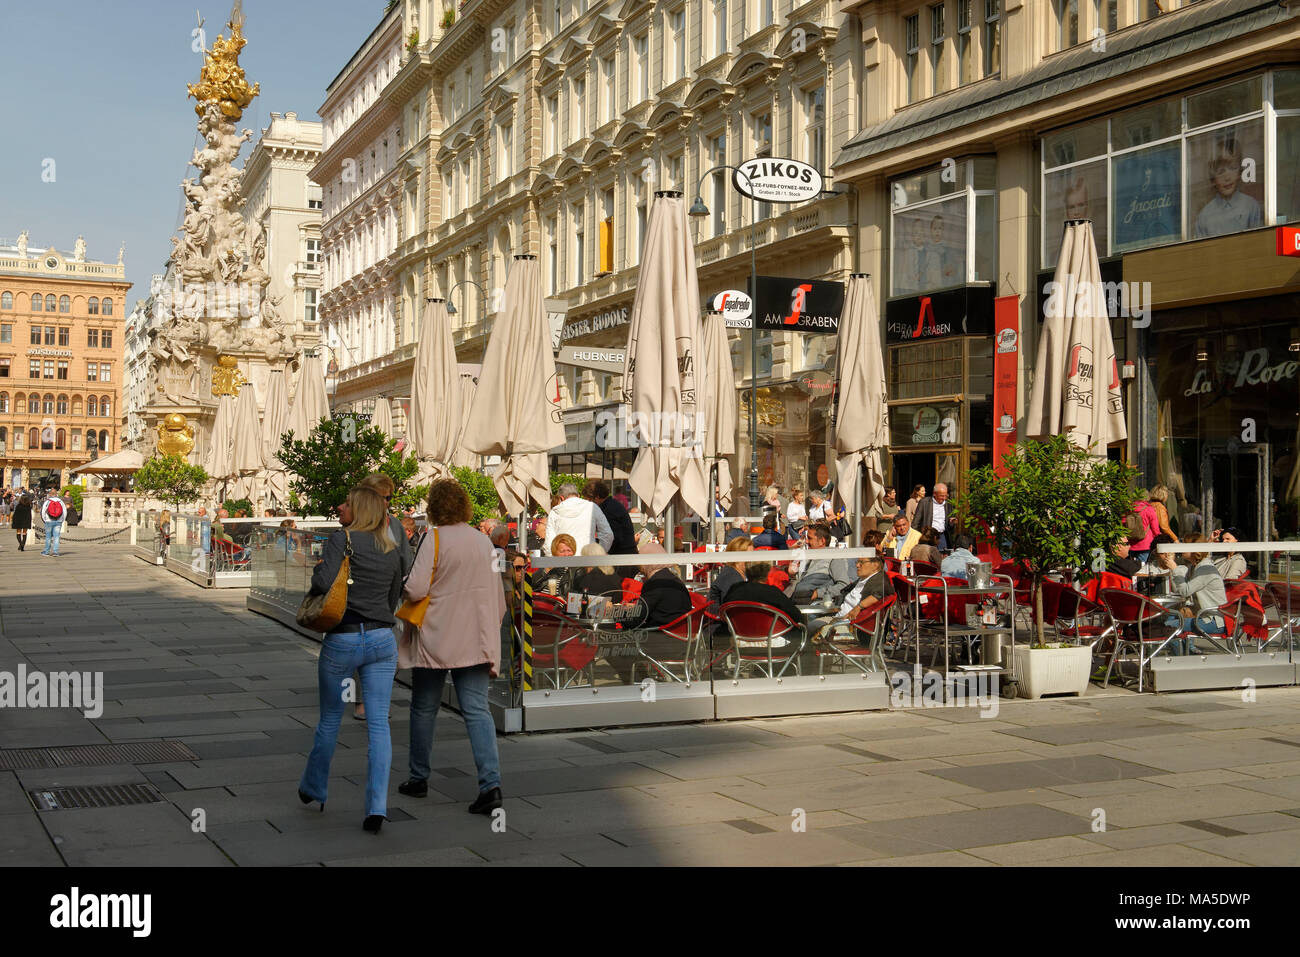 Street cafe at the Plague Column / Trinity Column on the Graben in Vienna, Austria Stock Photo